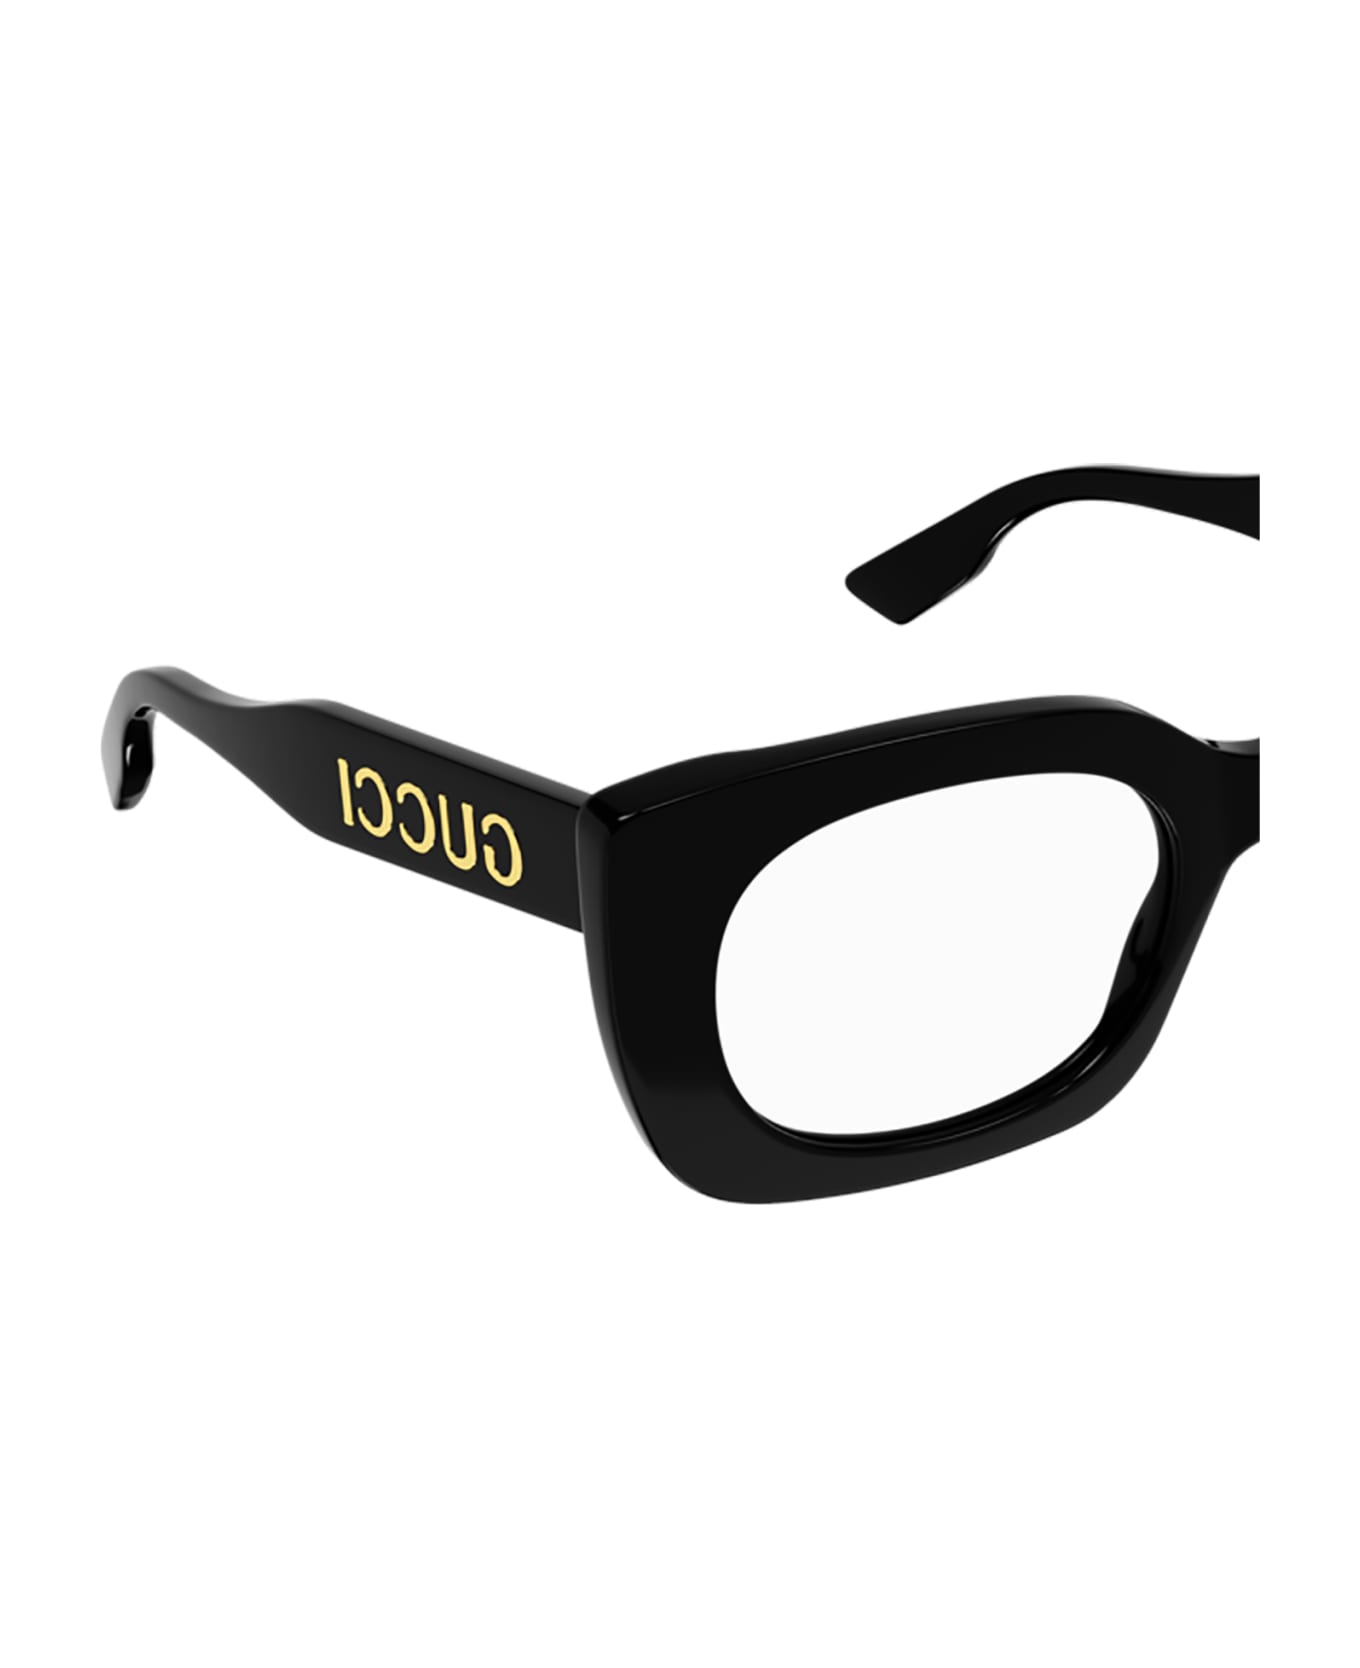 Gucci Eyewear 1car4d80a Glasses - 001 black black transpare